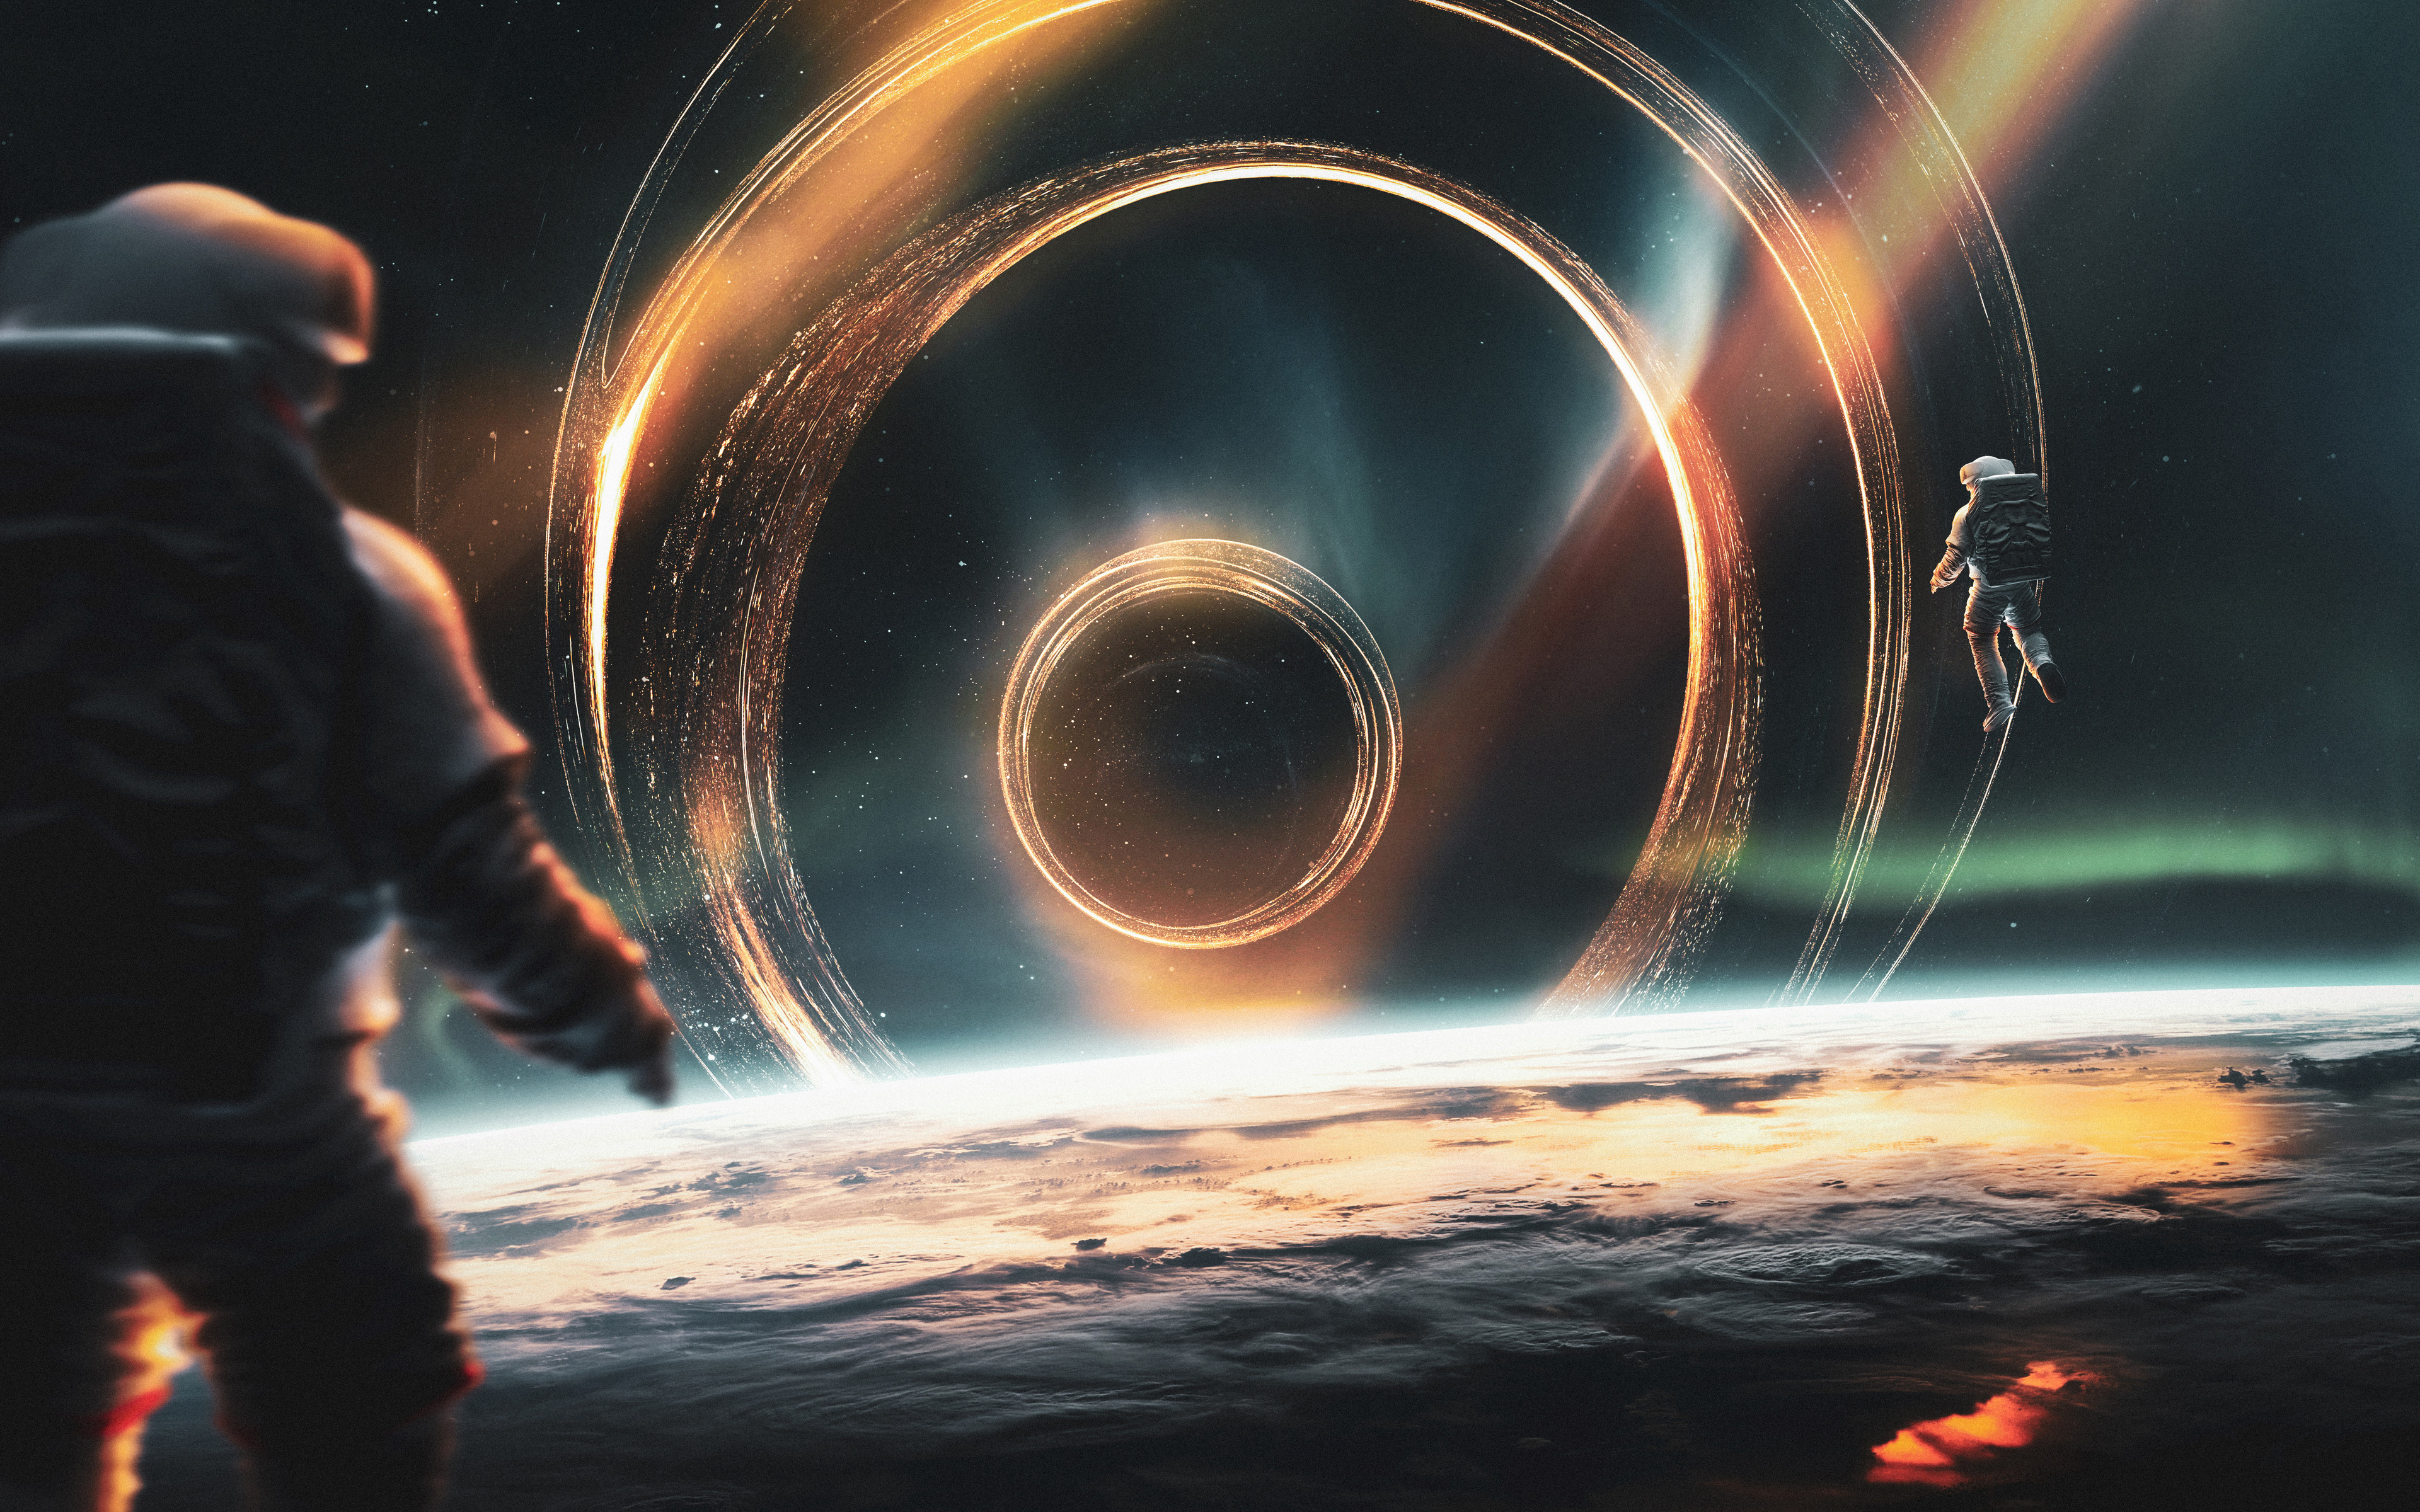 Digital Digital Art Artwork Illustration Render Space Art Galaxy Planet Astronaut Black Holes 3840x2400